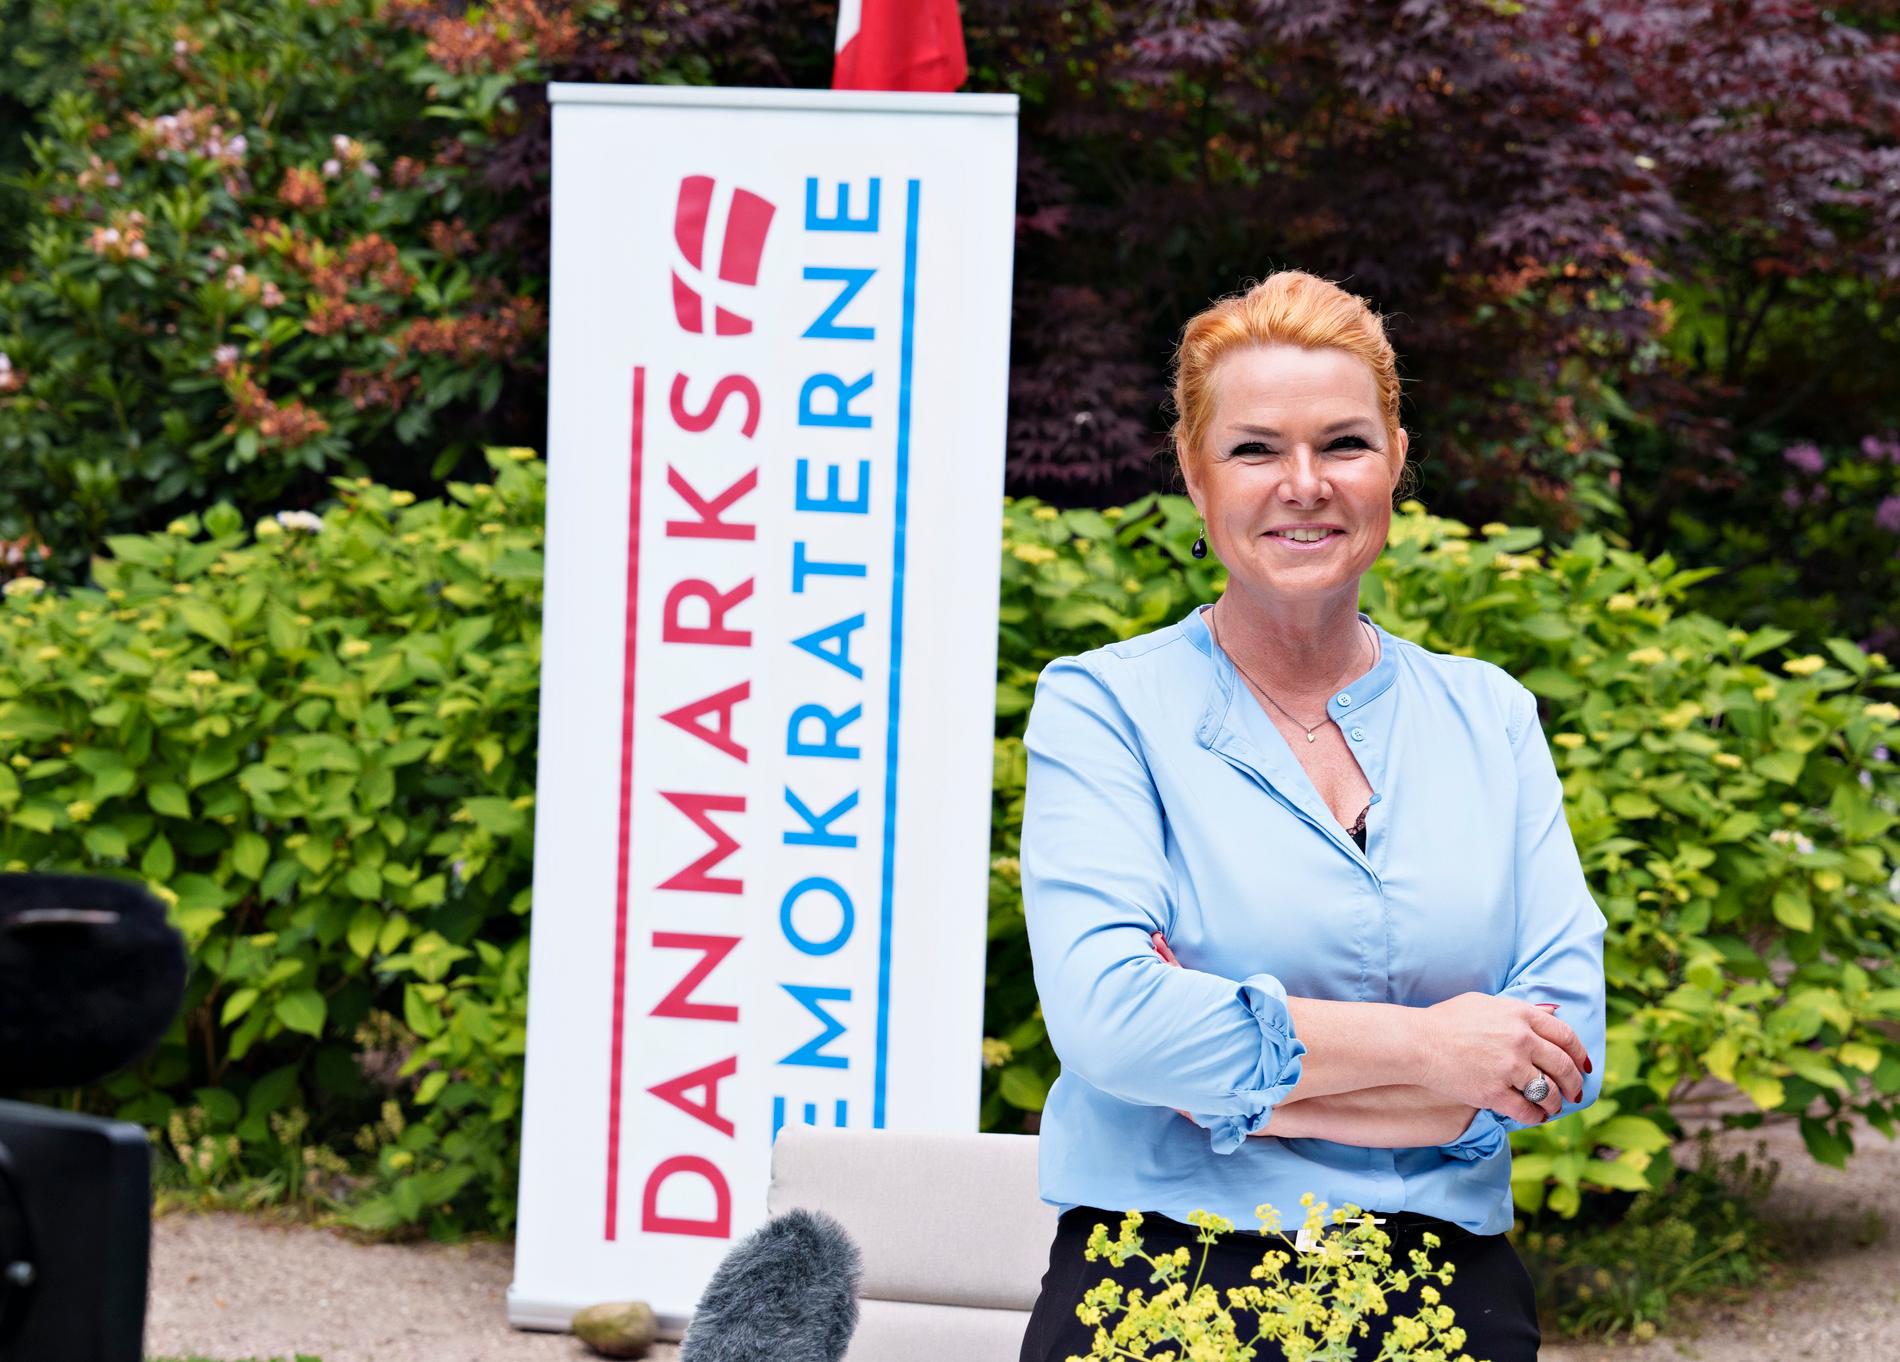 Inger Støjberg presenterar det nya partiet Danmarksdemokraterna vid en pressträff på Hvidsten Kro i Spentrup.